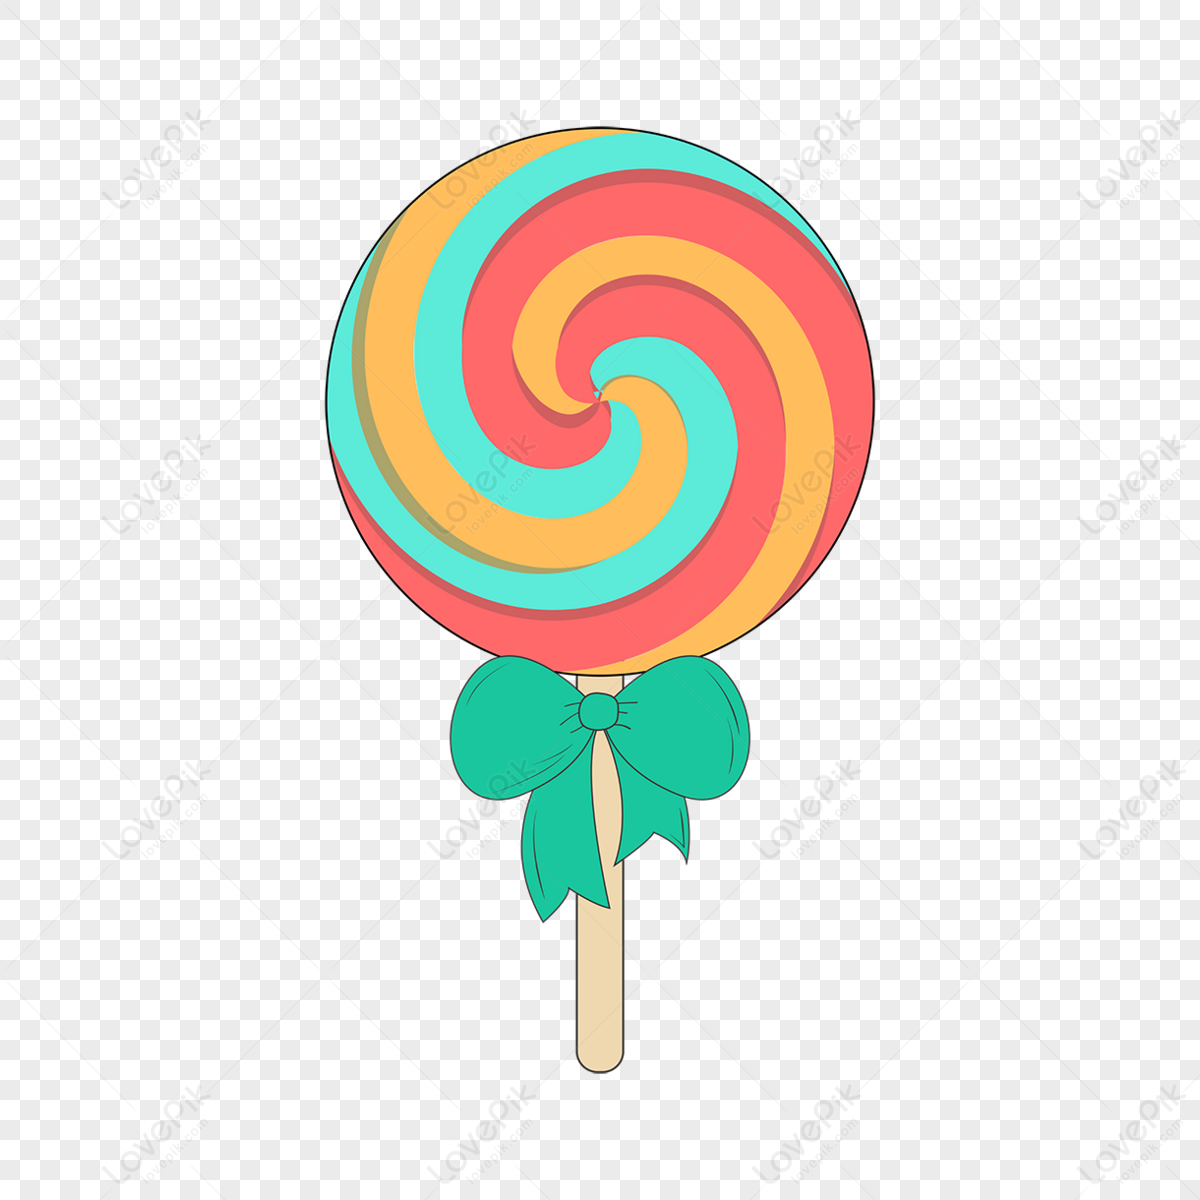 Lollipop Candy Cartoon Illustration Graphic by catalyststuff · Creative  Fabrica